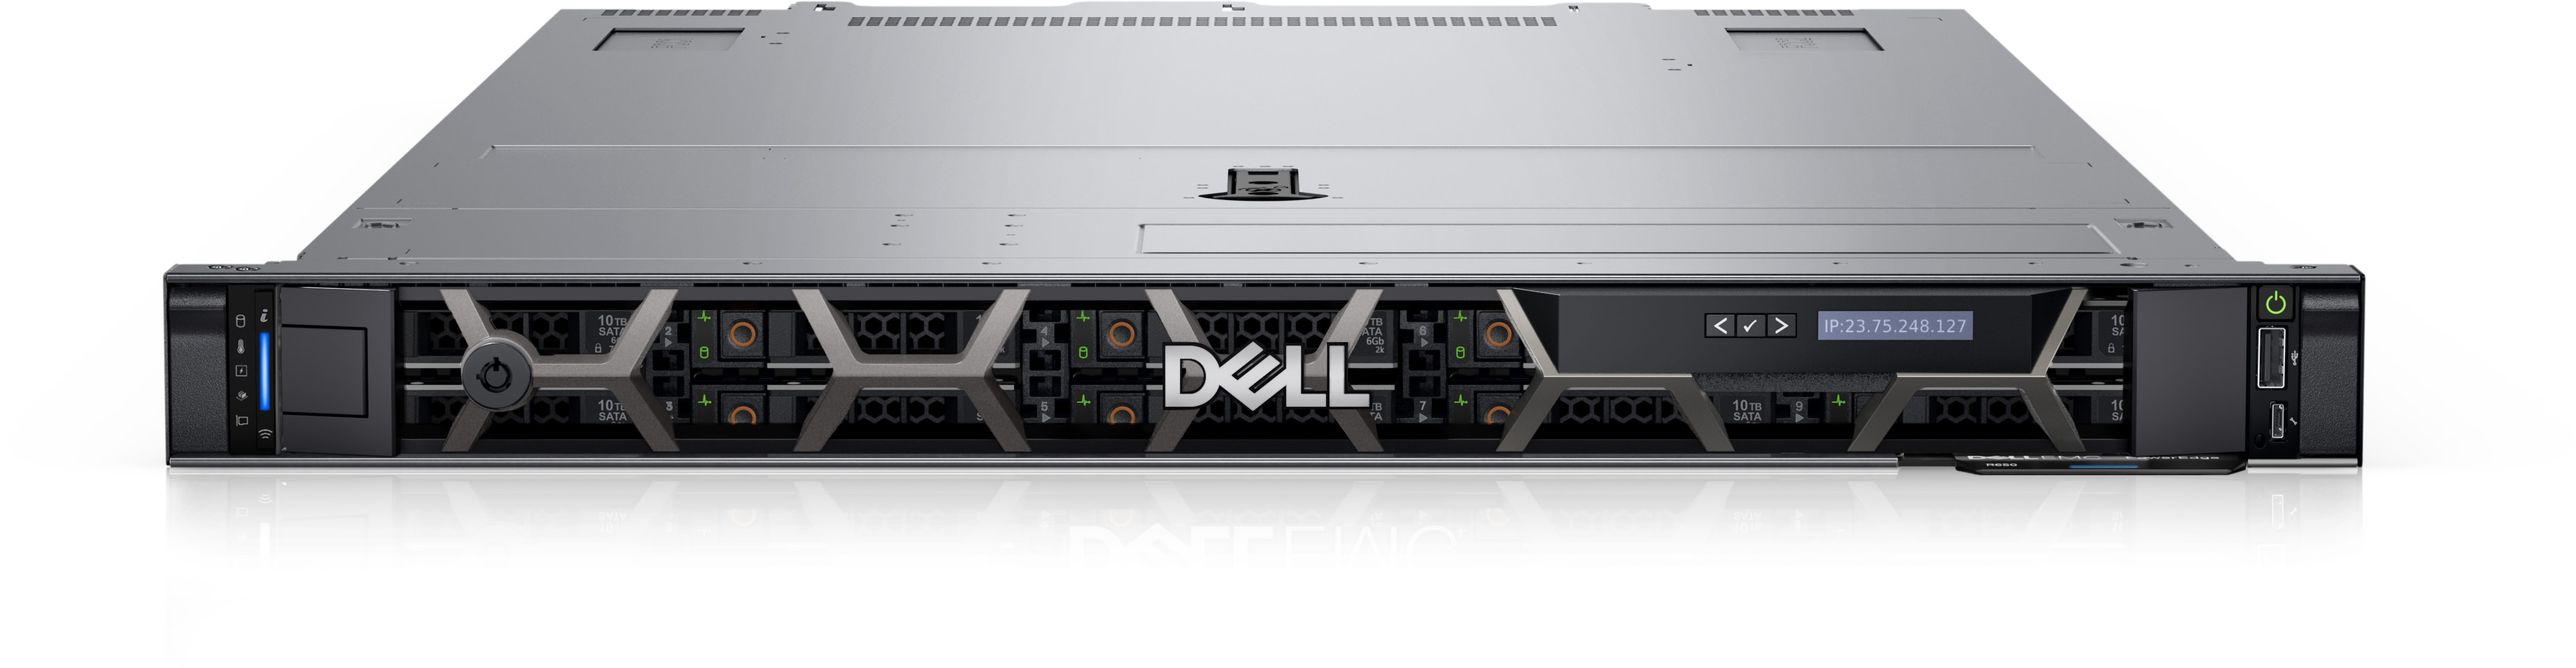 Poweredge R650 Rack Server Dell Usa